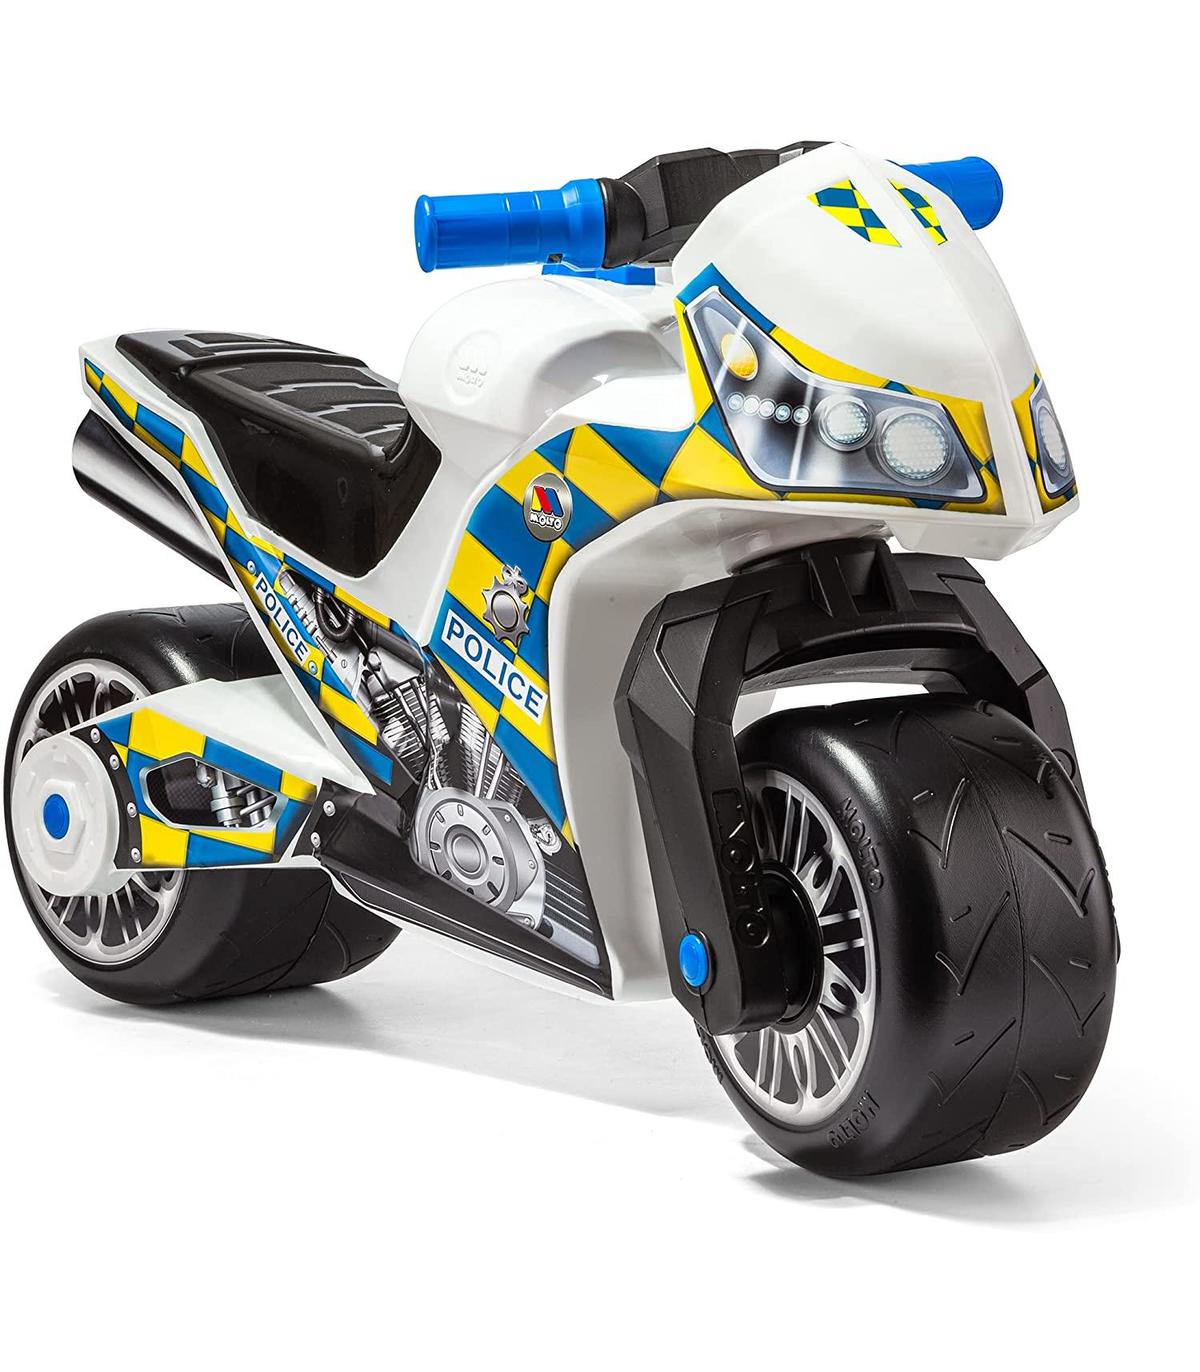 Toy Story Moto Correpasillos